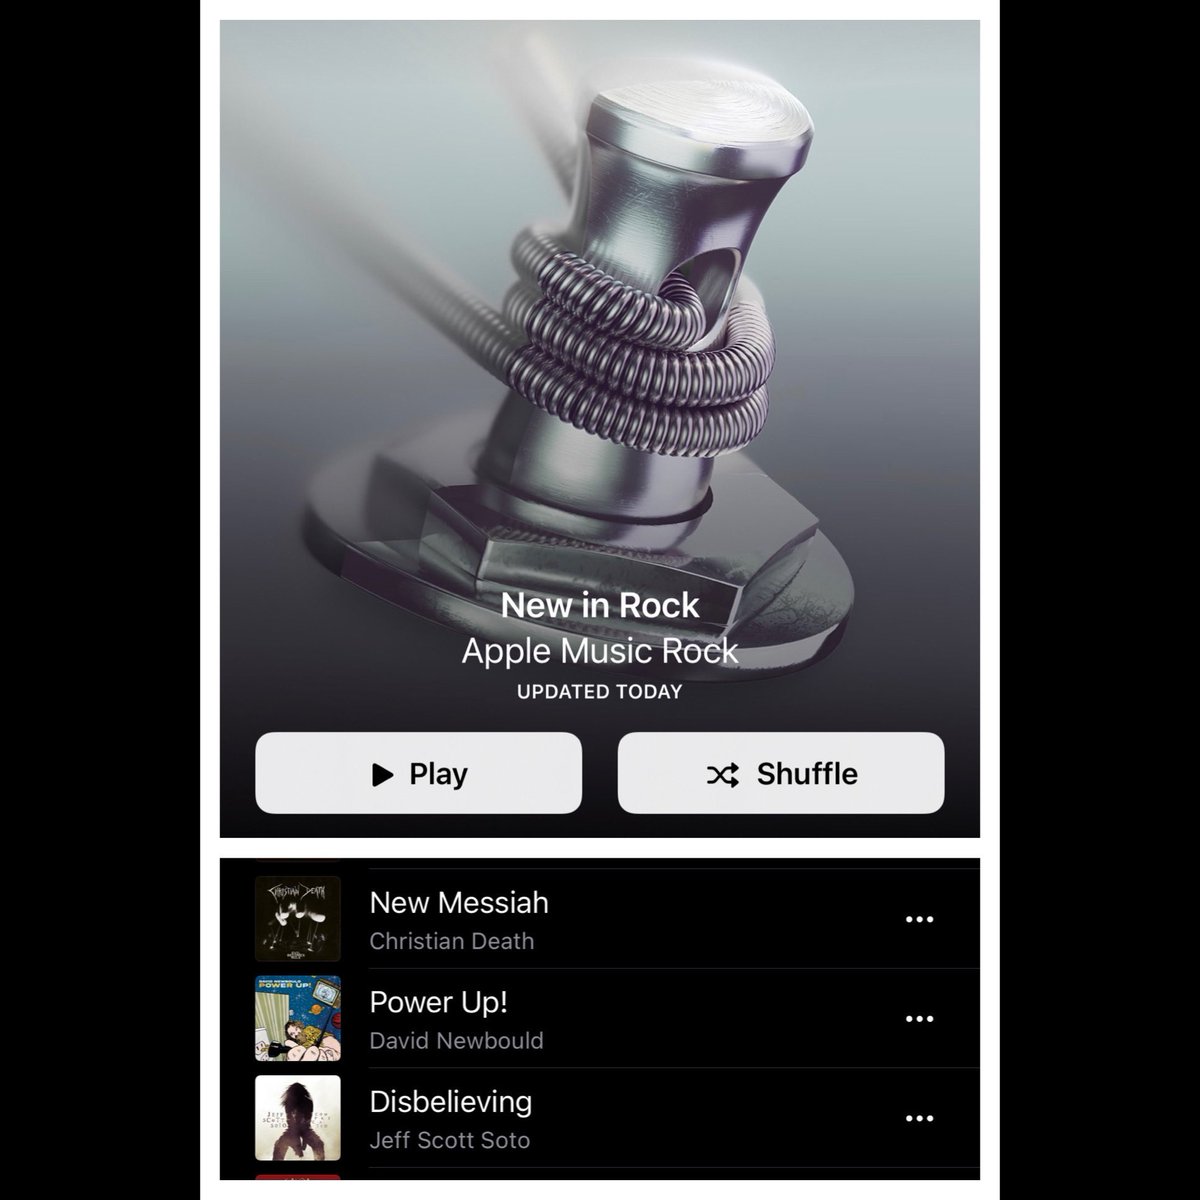 Listen to David Newbould's new single “Power Up!” on Apple Music's ‘New in Rock’ playlist 💥 @David_Newbould @AppleMusic @_smithmusic 

music.apple.com/us/playlist/ne… 

@michaeljmedia #davidnewbould #powerup #newinrock #applemusicplaylist #blackbirdrecordlabel